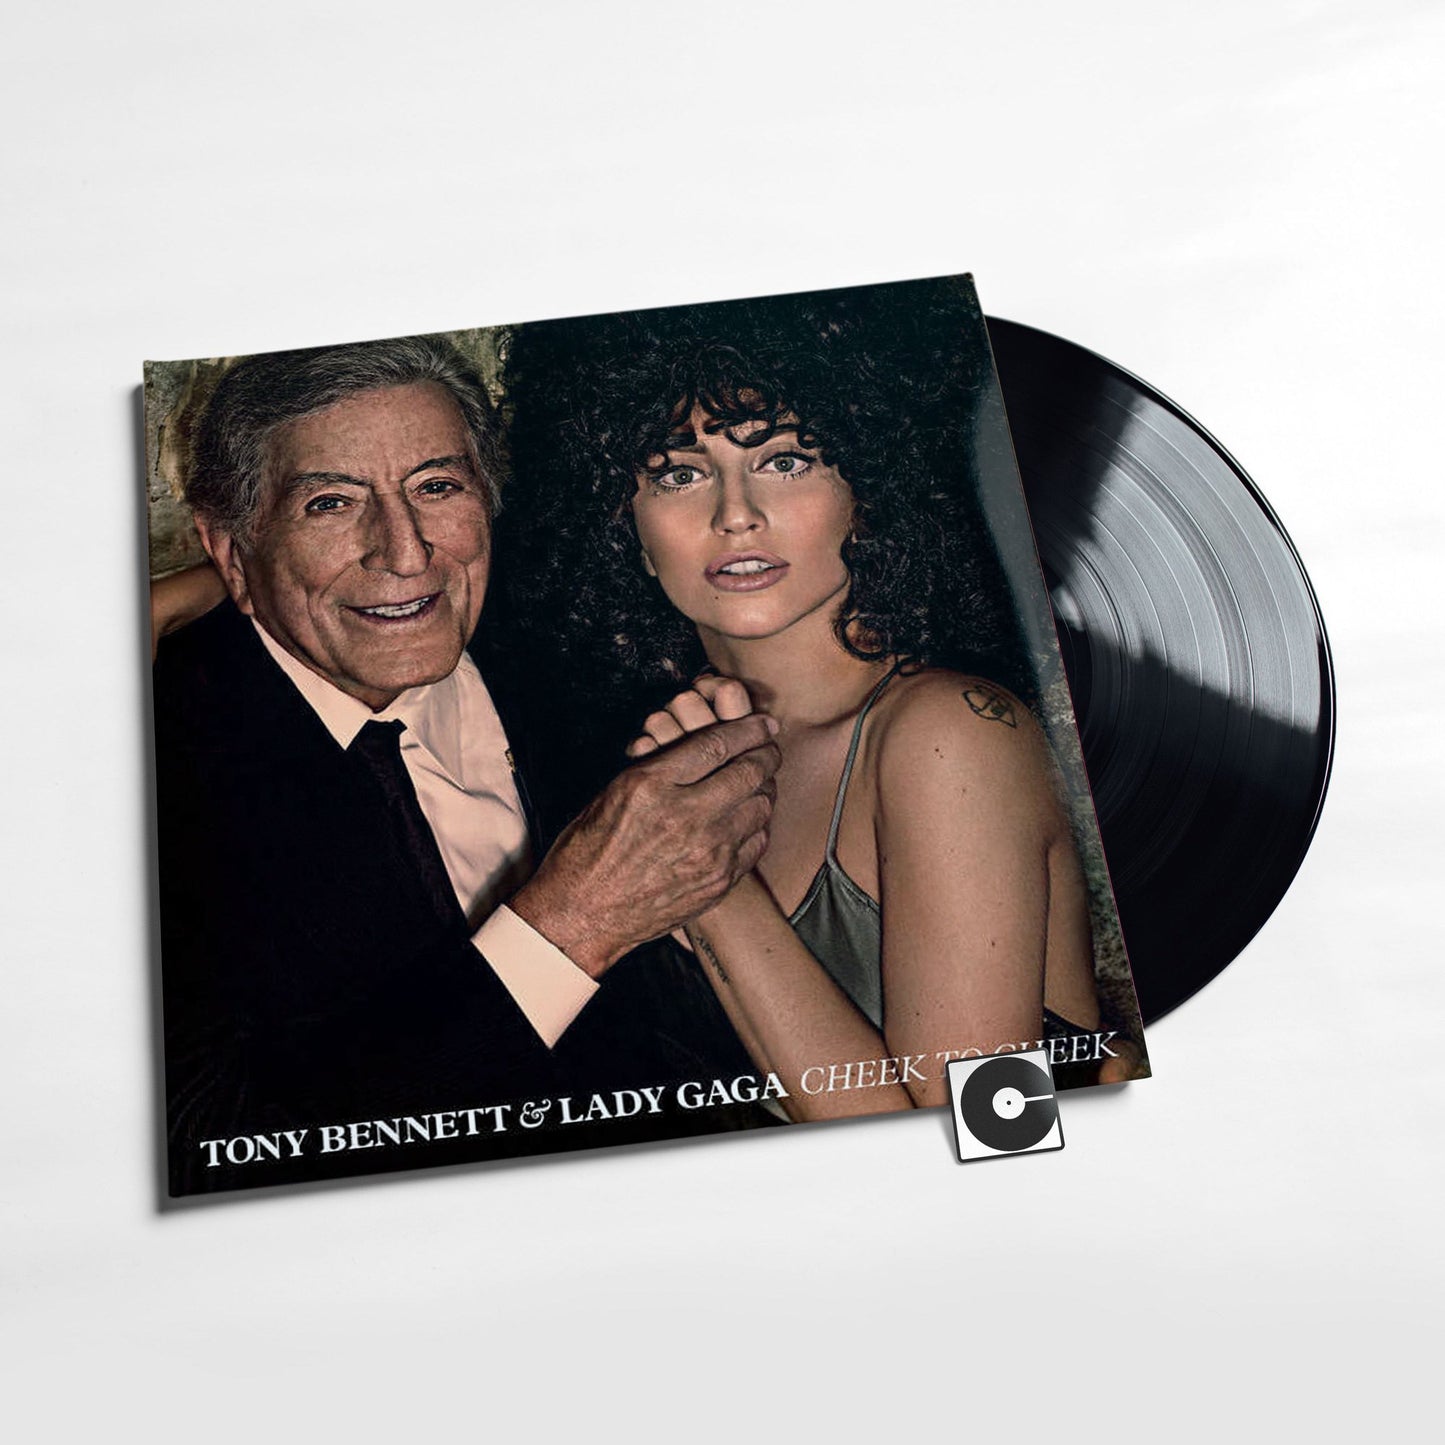 Tony Bennett & Lady Gaga - "Cheek To Cheek"